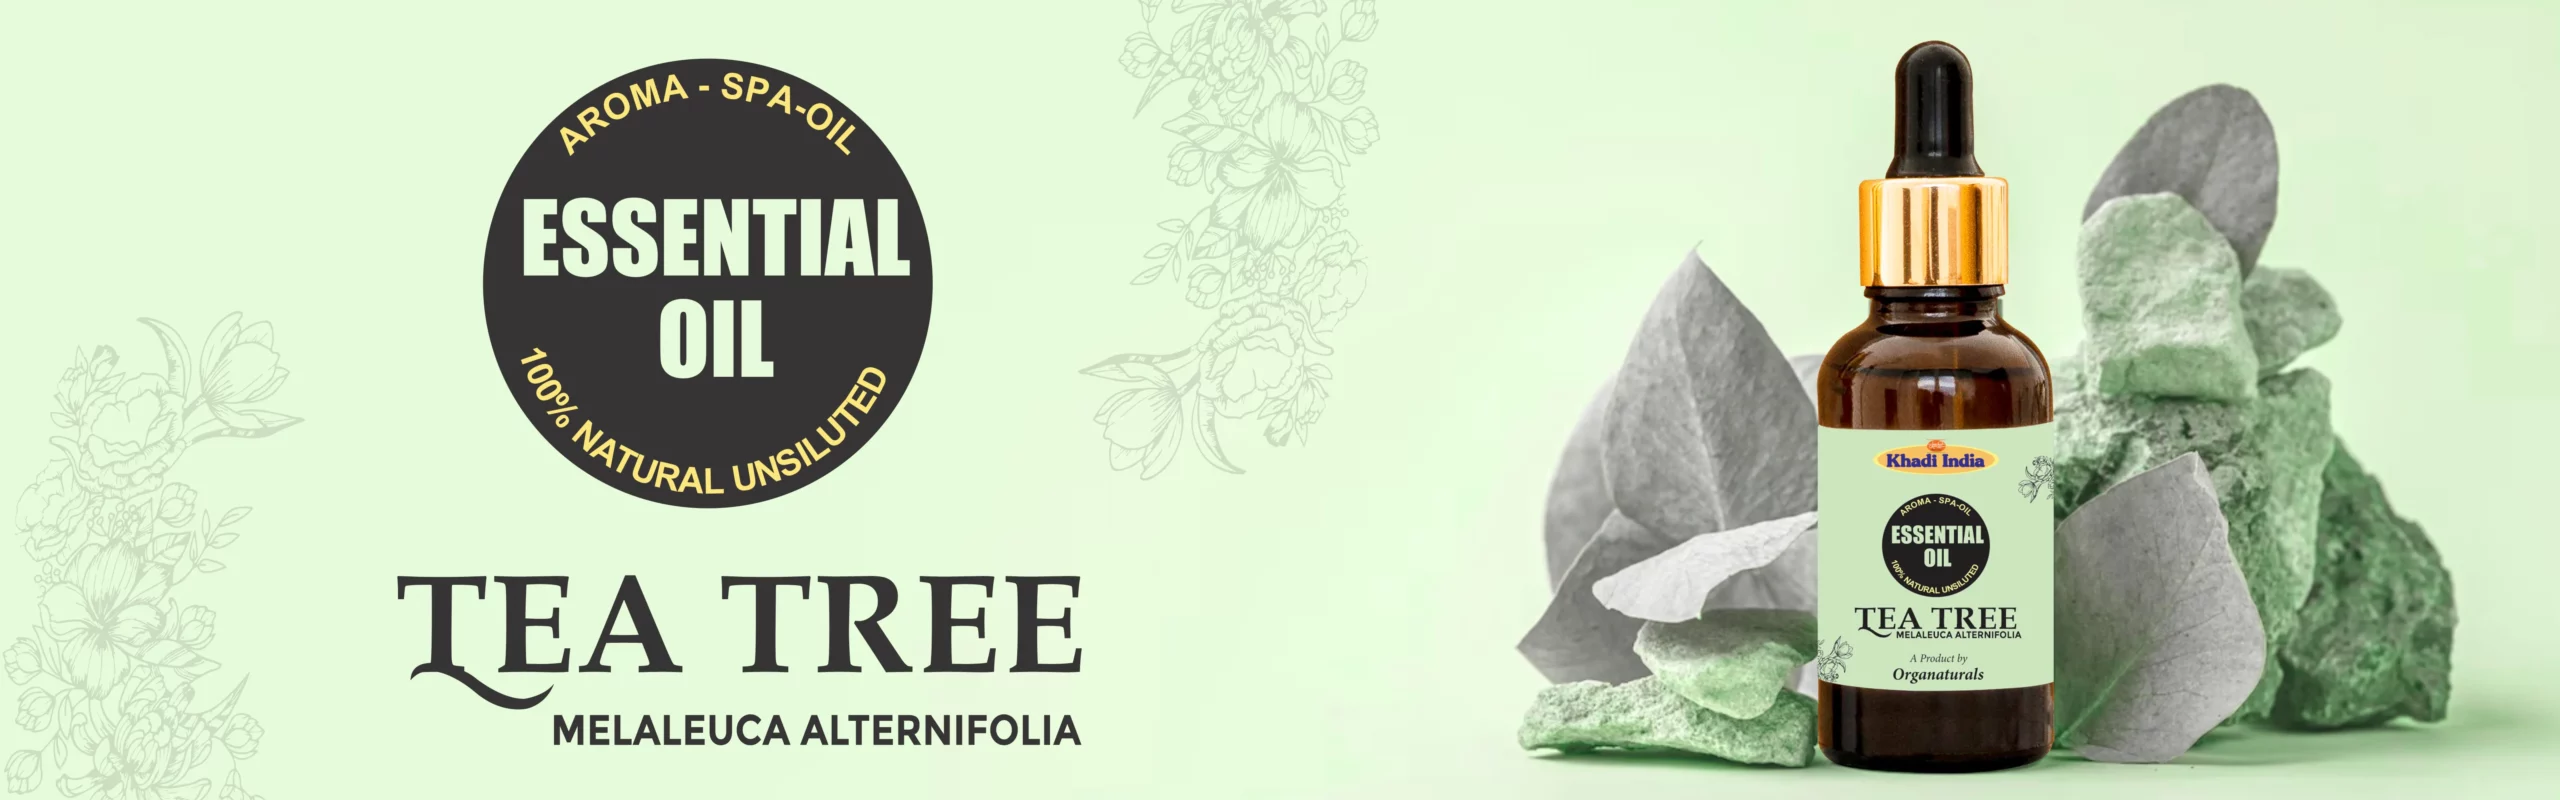 Tea Tree Essential Oil - www.dkihenna.com